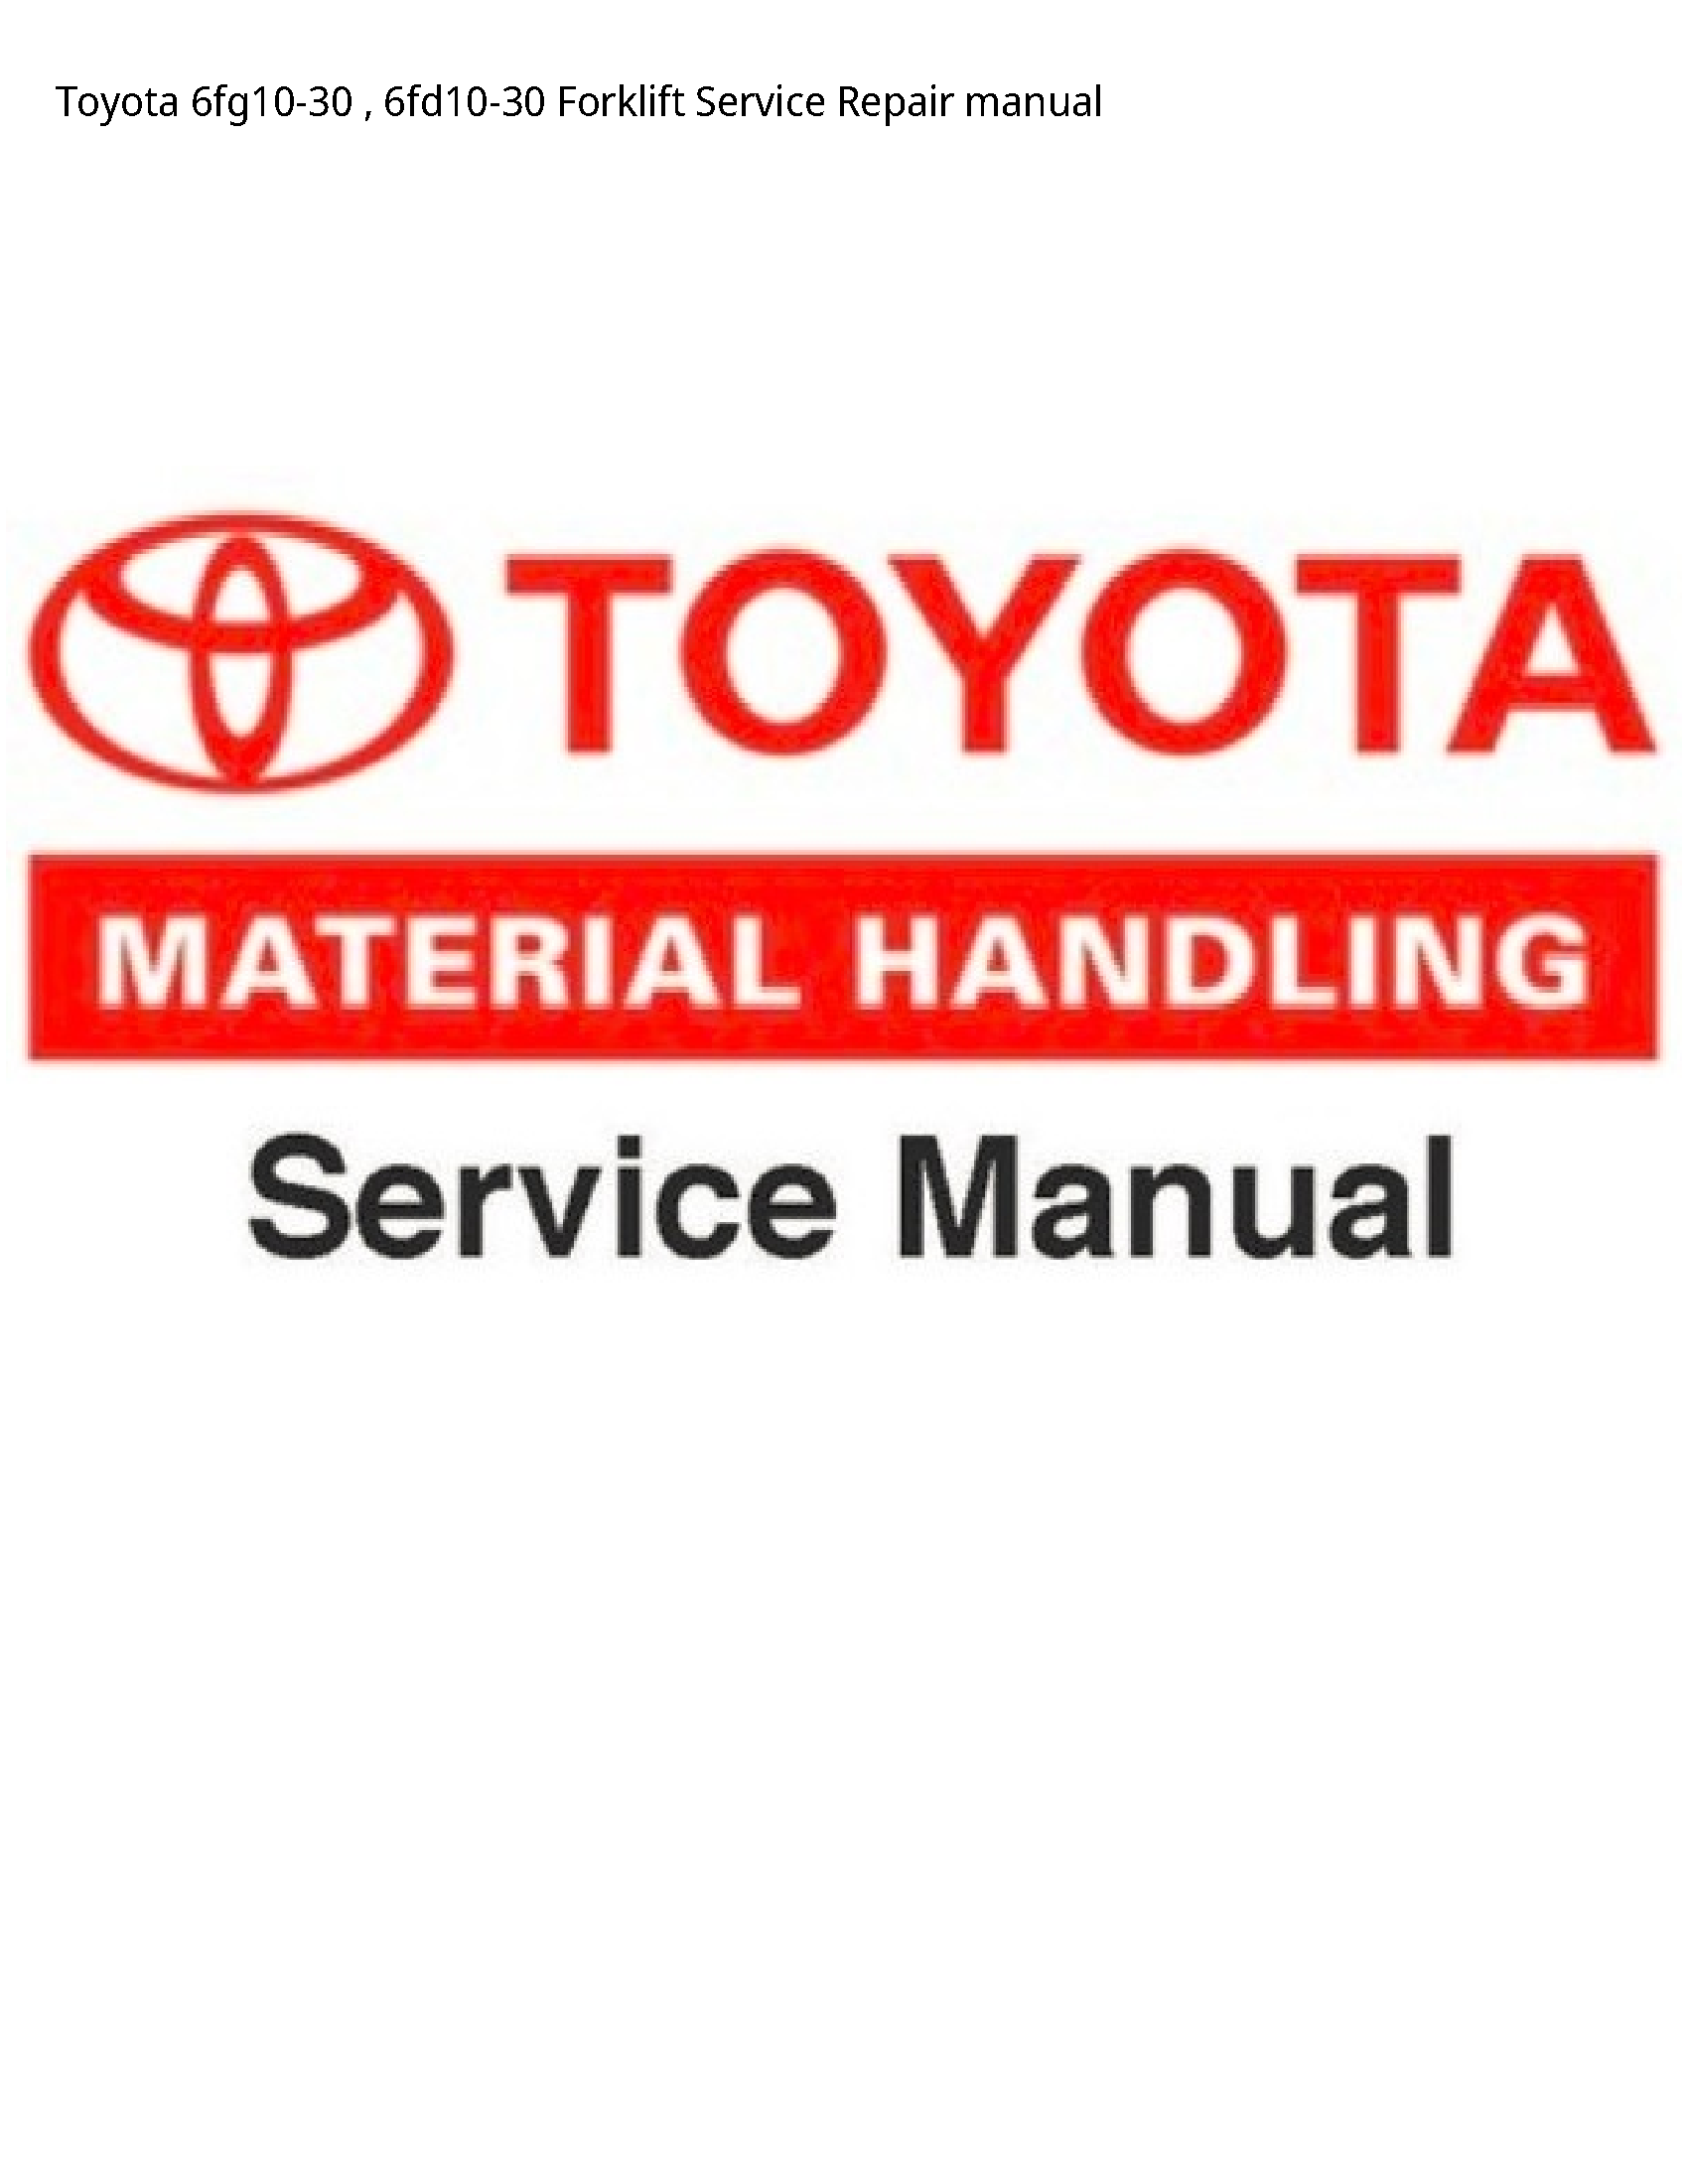 Toyota 6fg10-30 Forklift manual